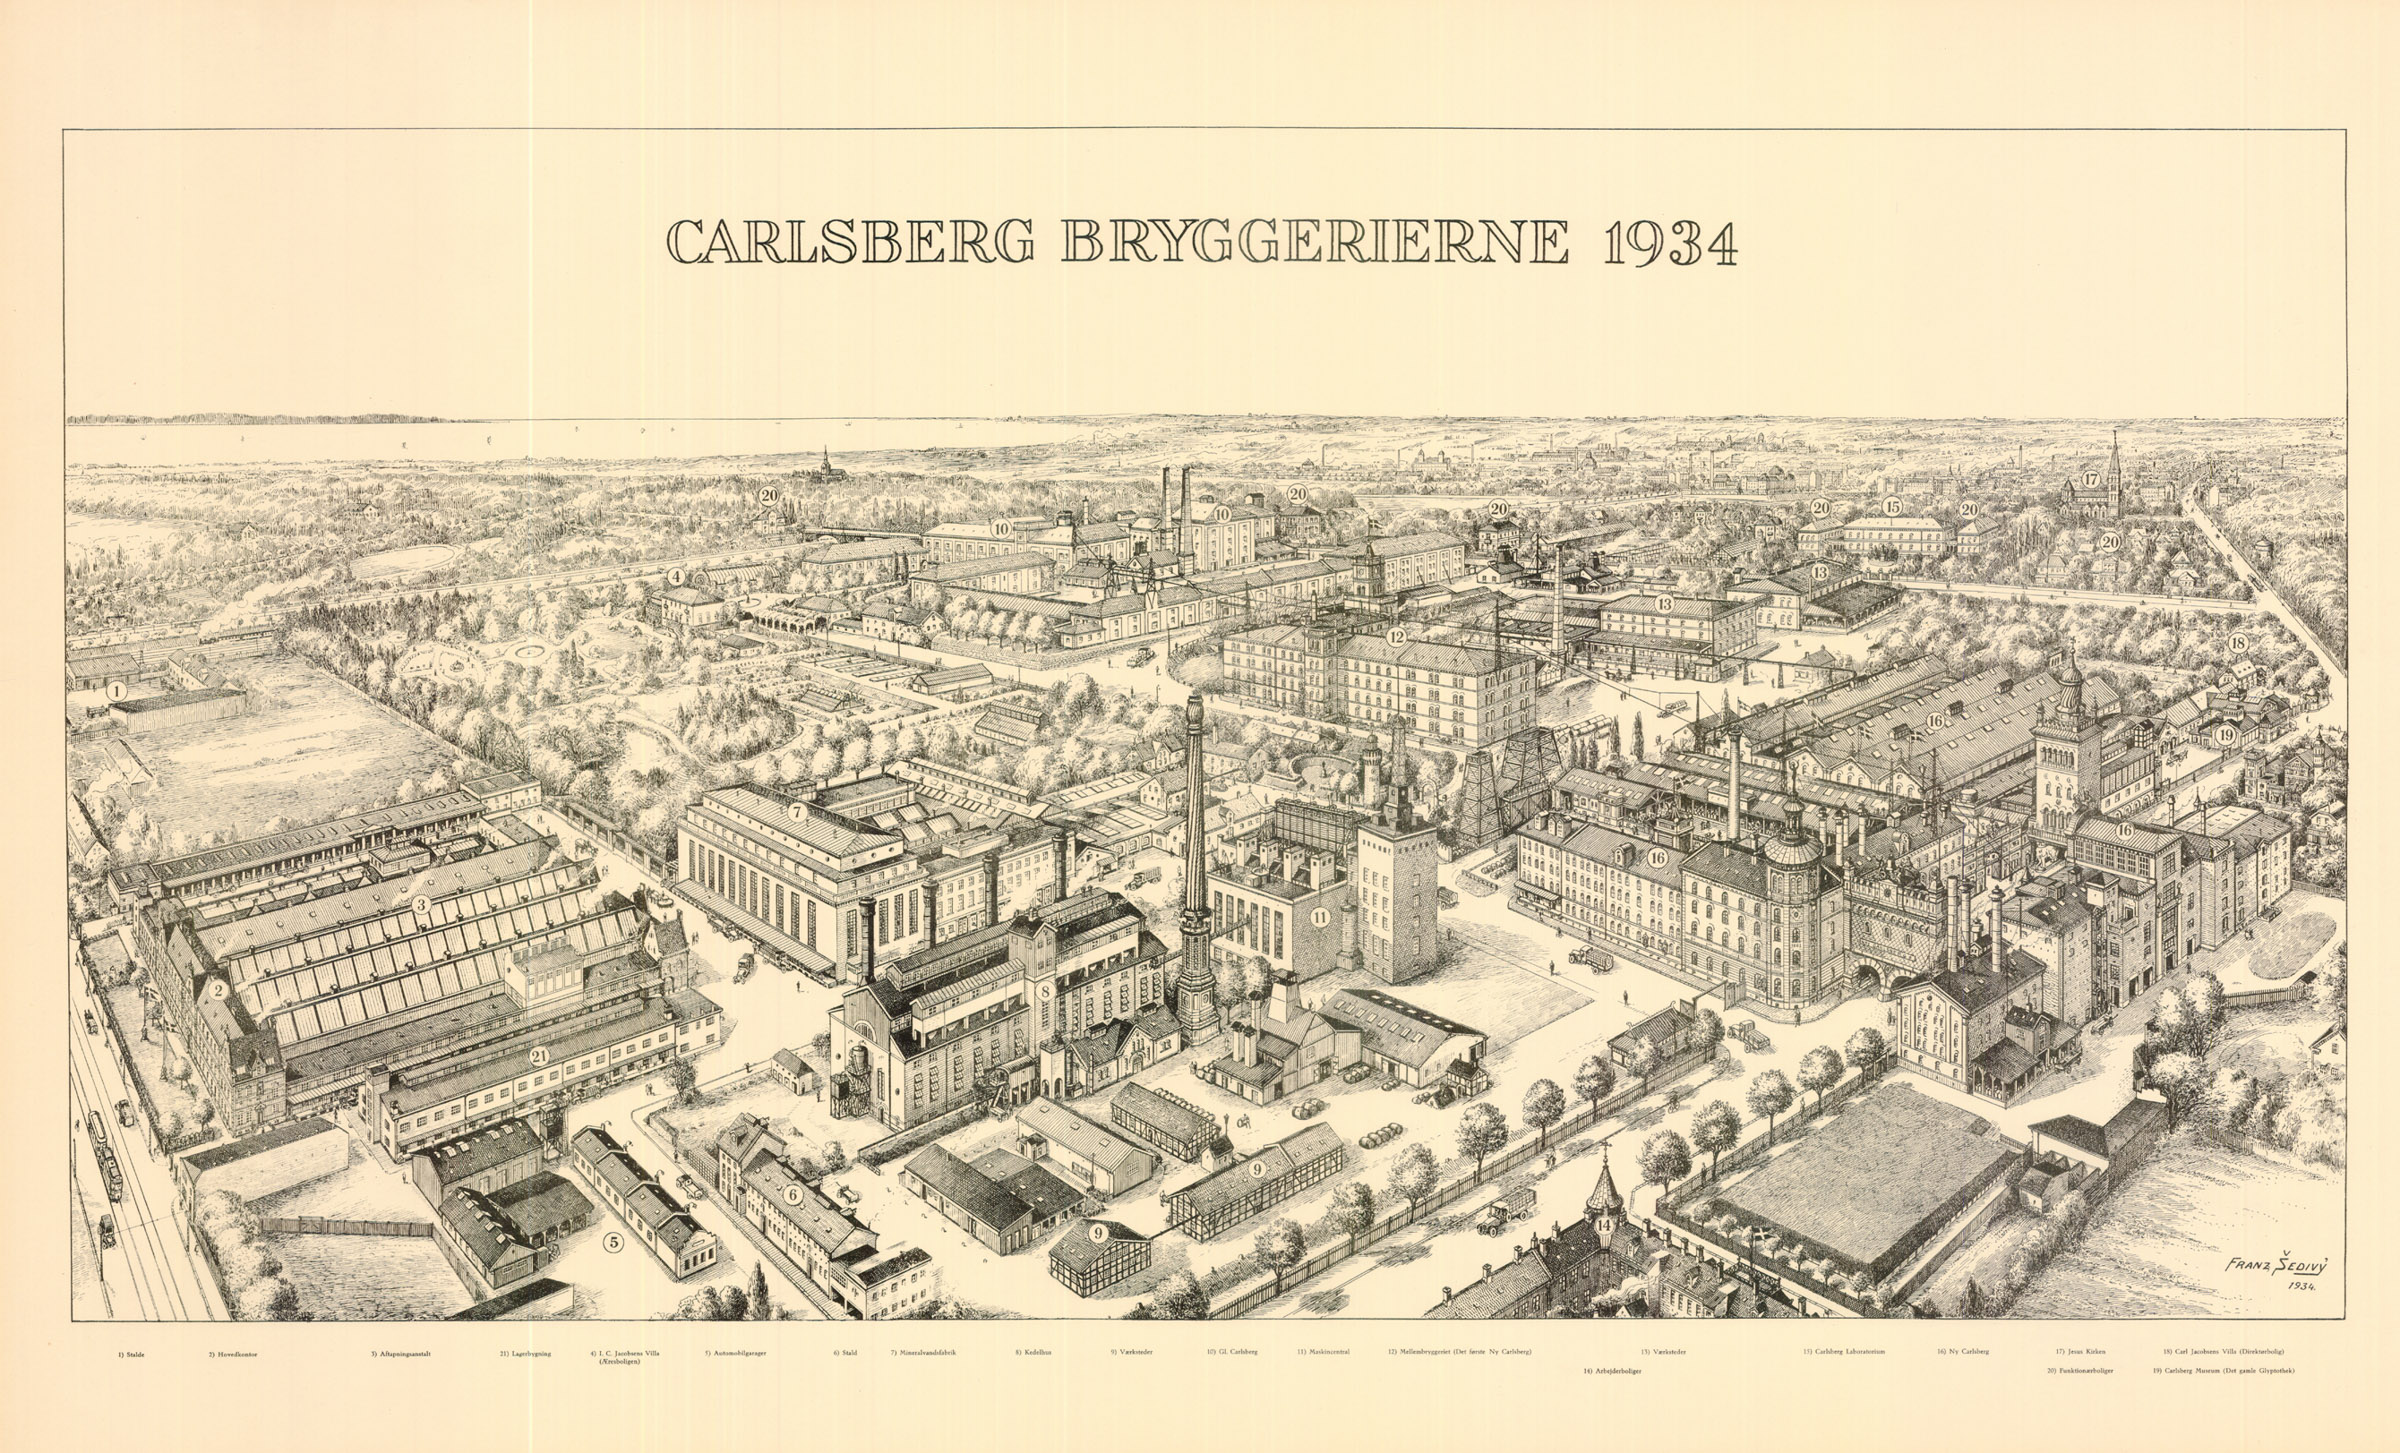 The Carlsberg Story